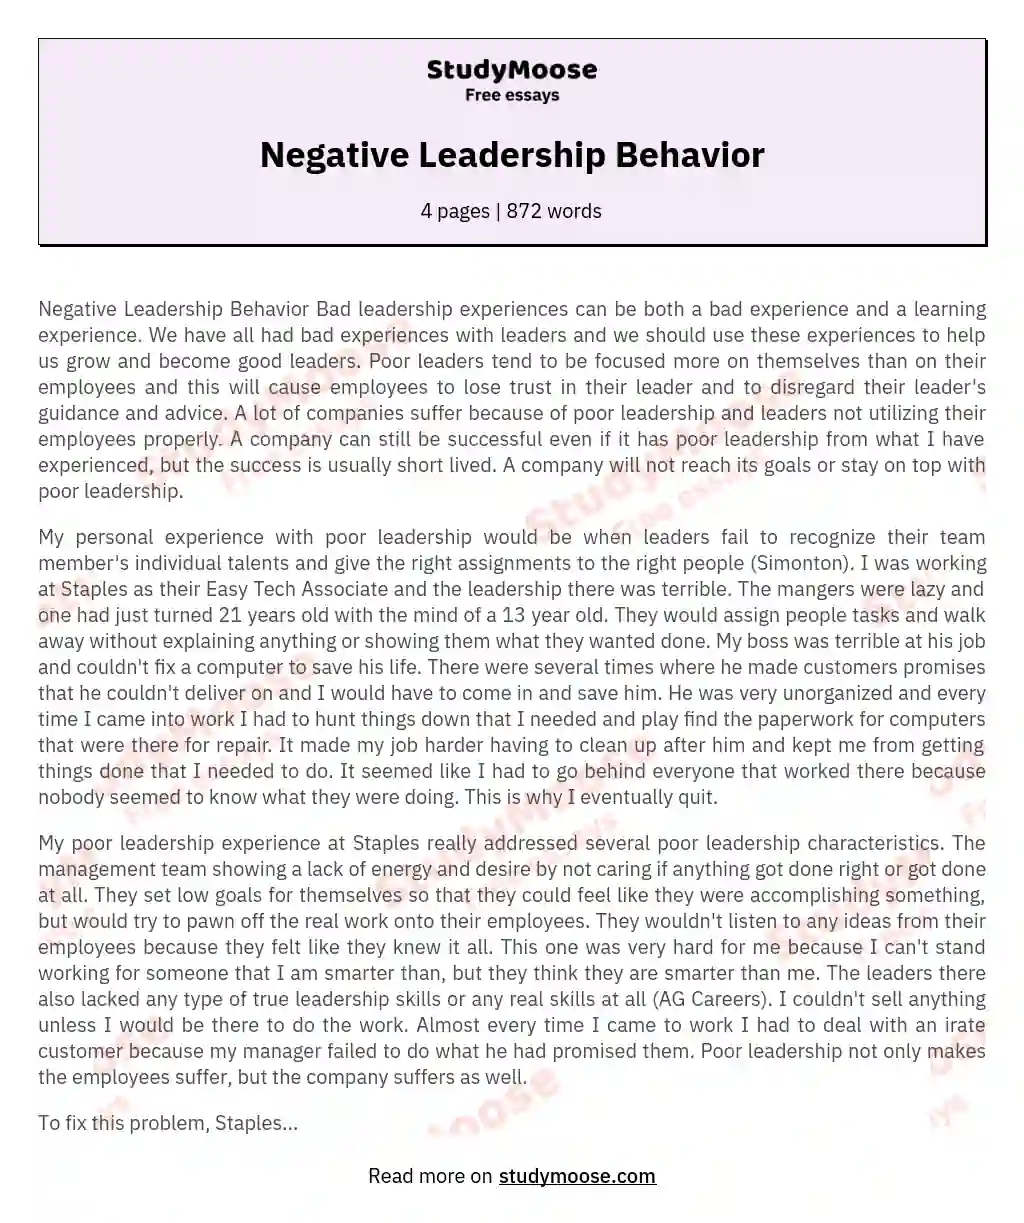 Negative Leadership Behavior essay